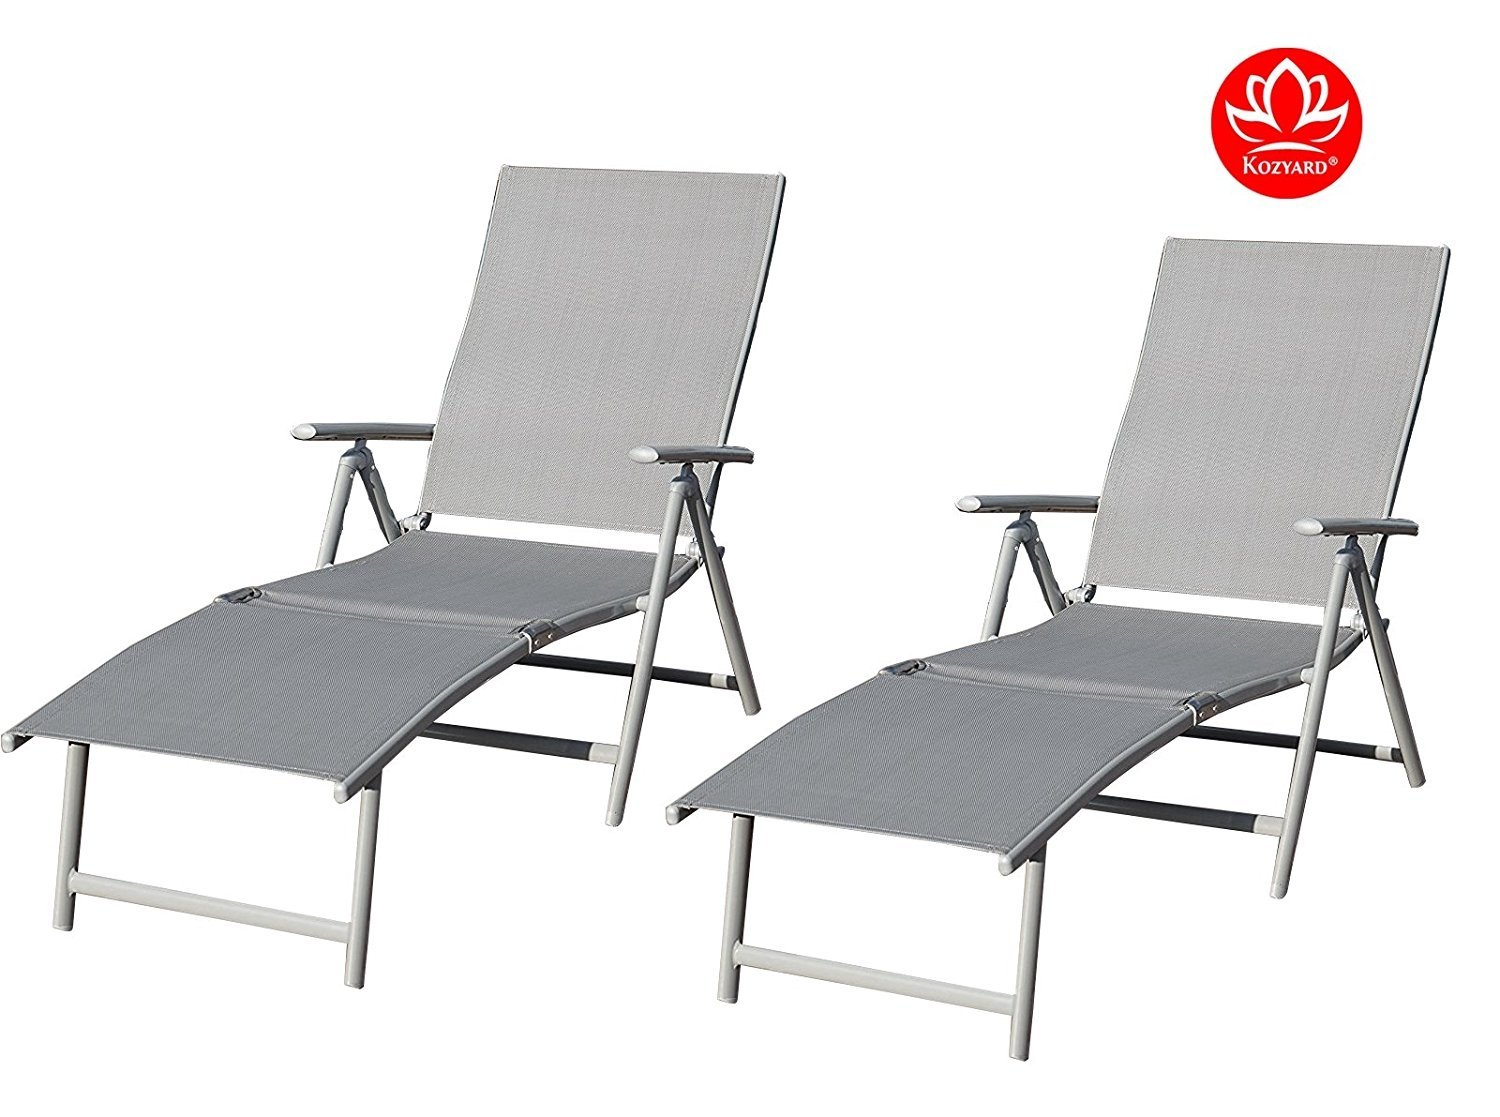 Kozyard Aluminum Beach Yard Pool Adjustable Chaise Lounge Chair ( Gray, 2 Packs) - image 3 of 7